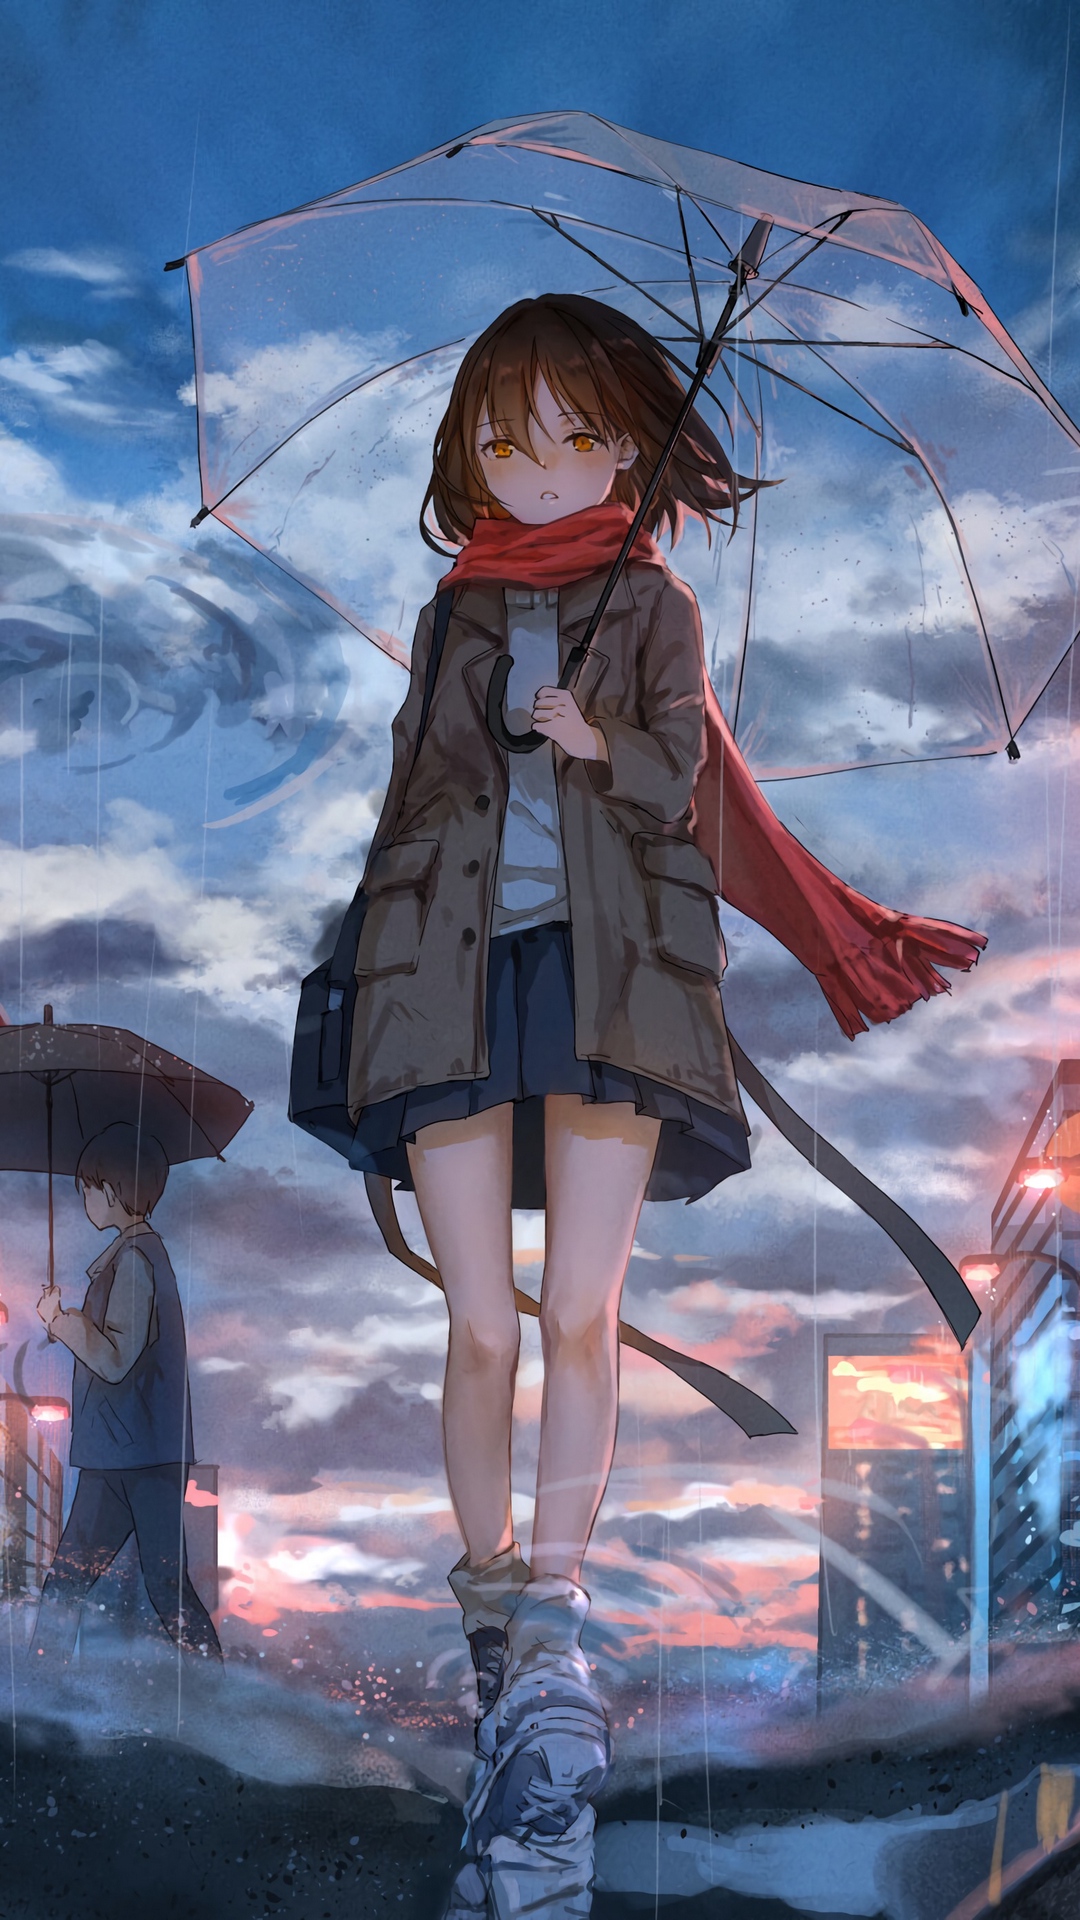 Cute Anime Girl With Umbrella gambar ke 2